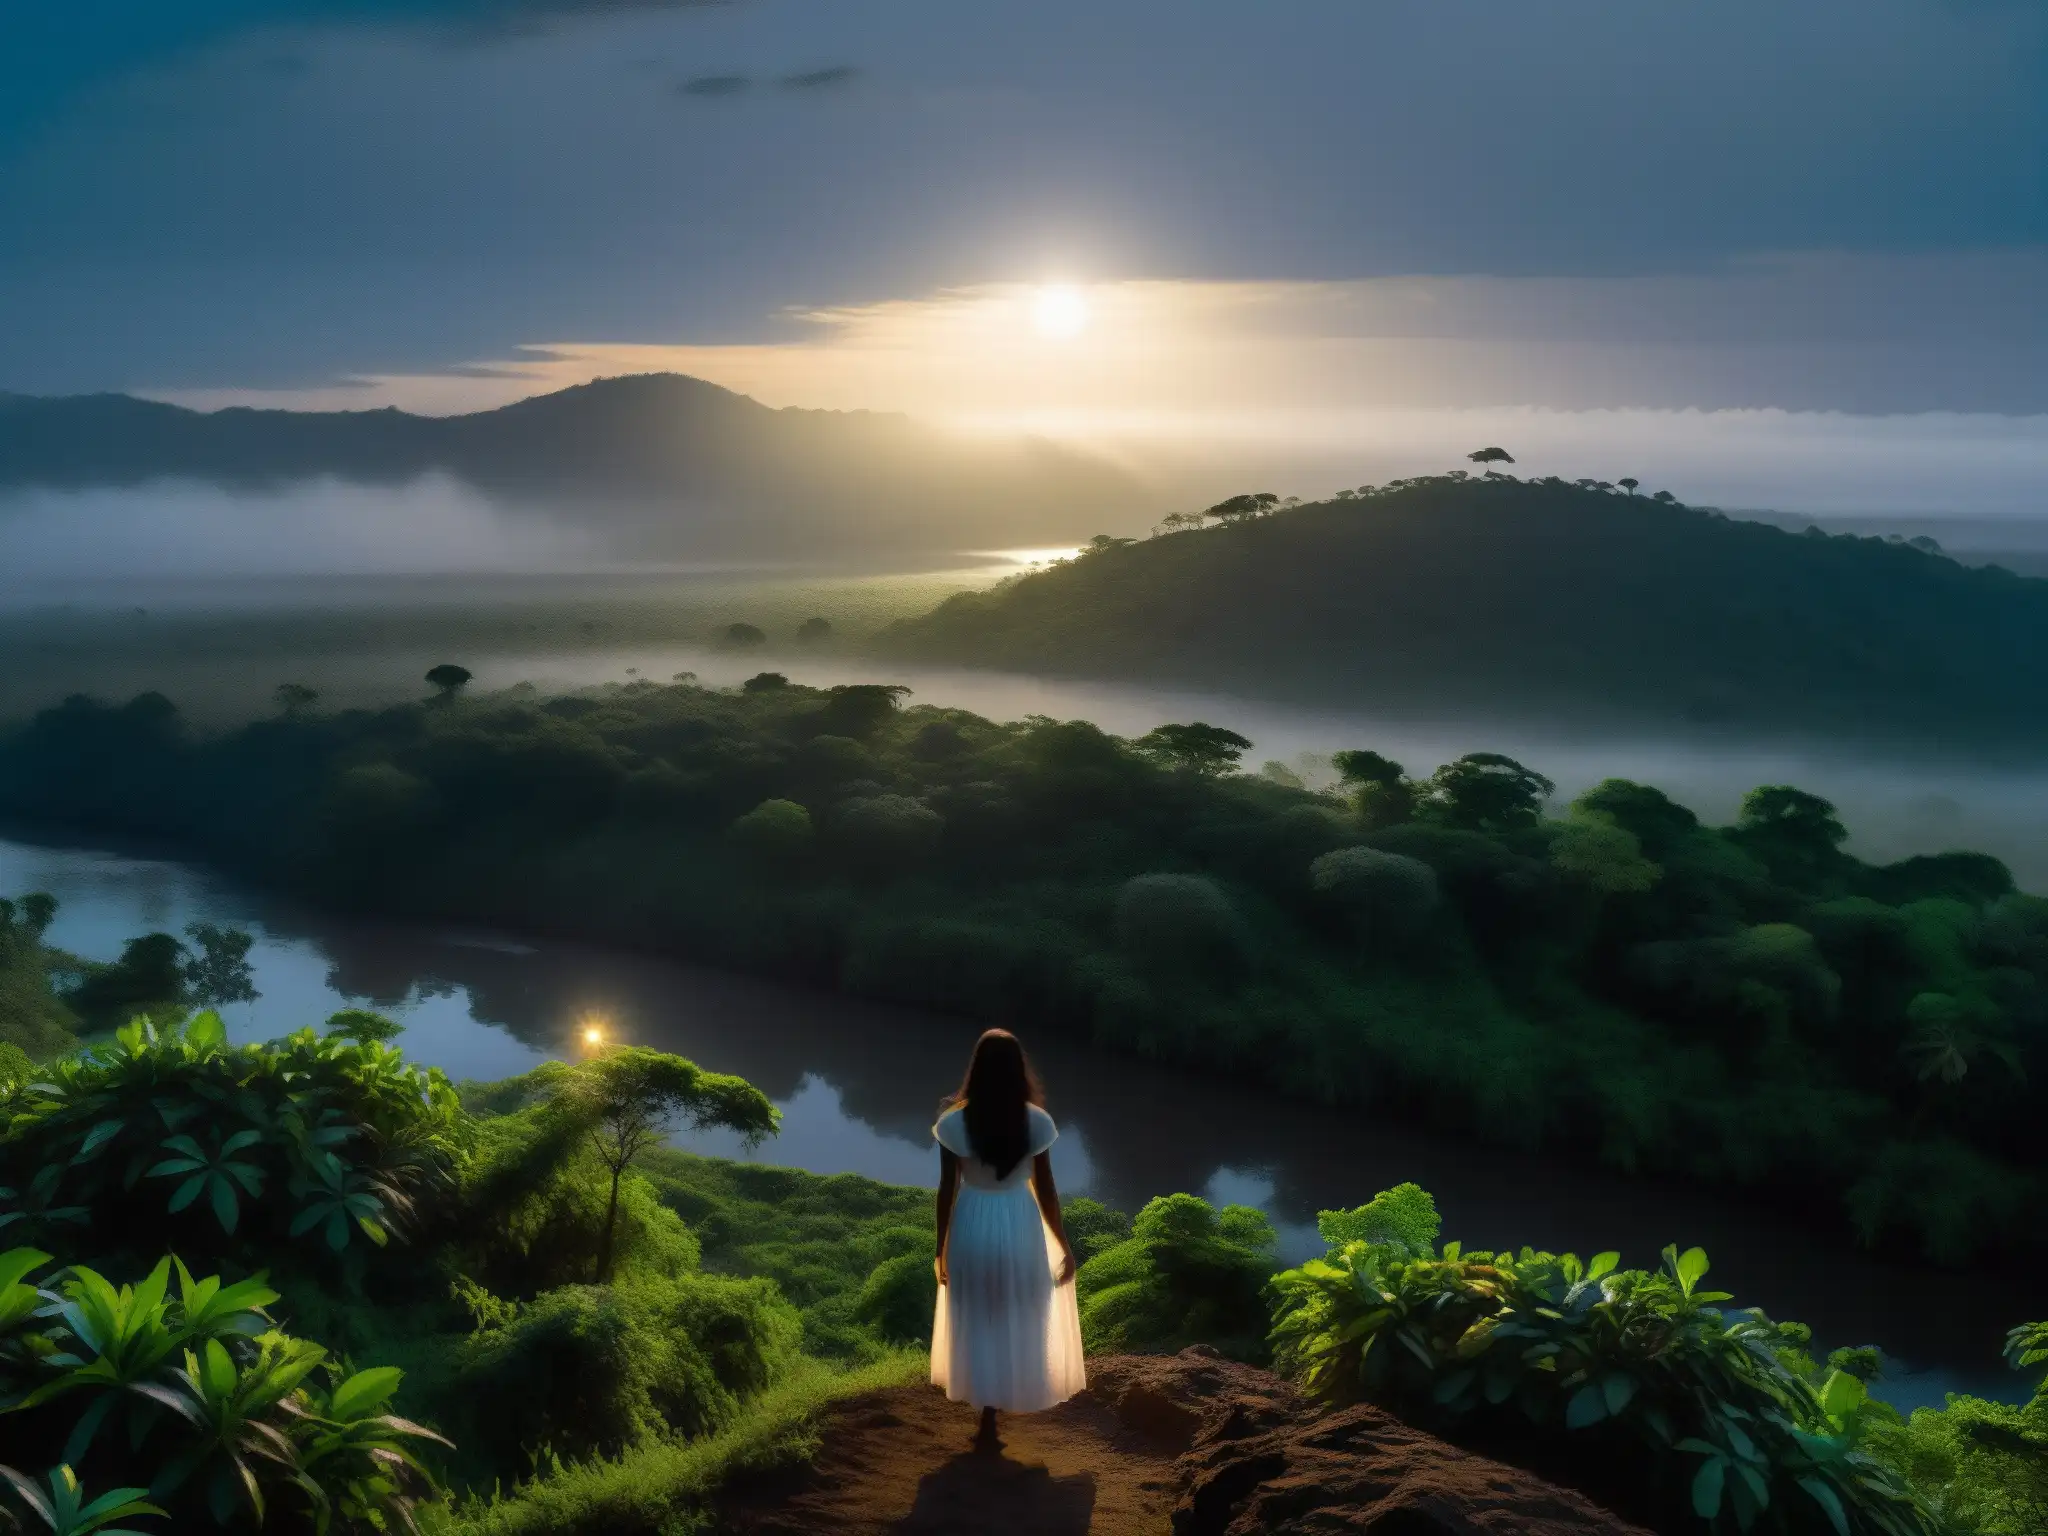 Silueta en la noche brumosa de los llanos venezolanos, evocando la misteriosa leyenda de La Sayona